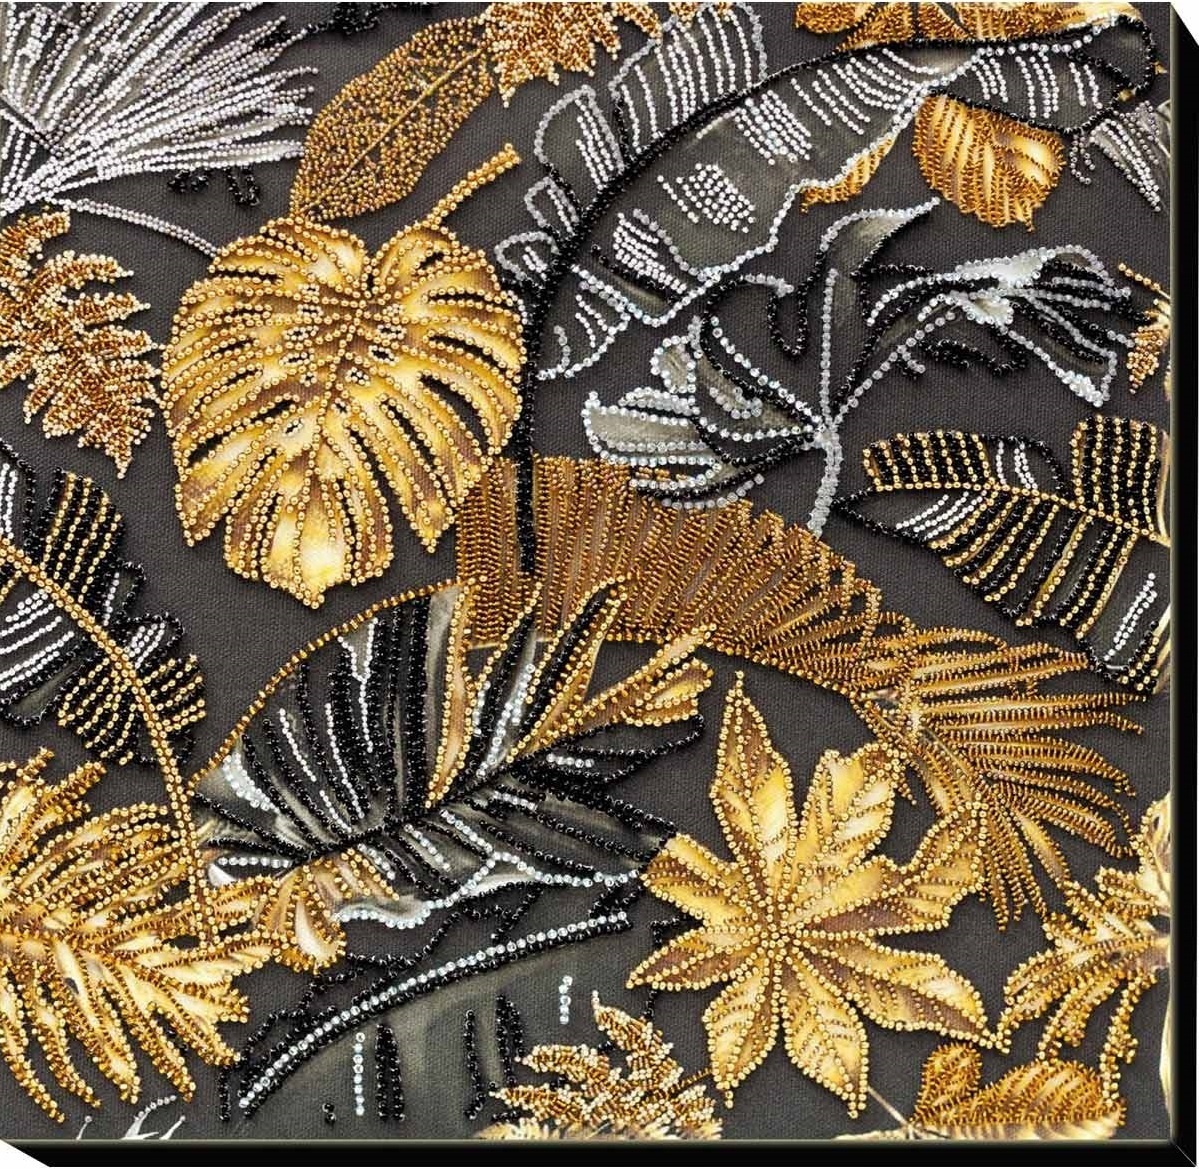 Golden Tropics Bead Embroidery Kit фото 1